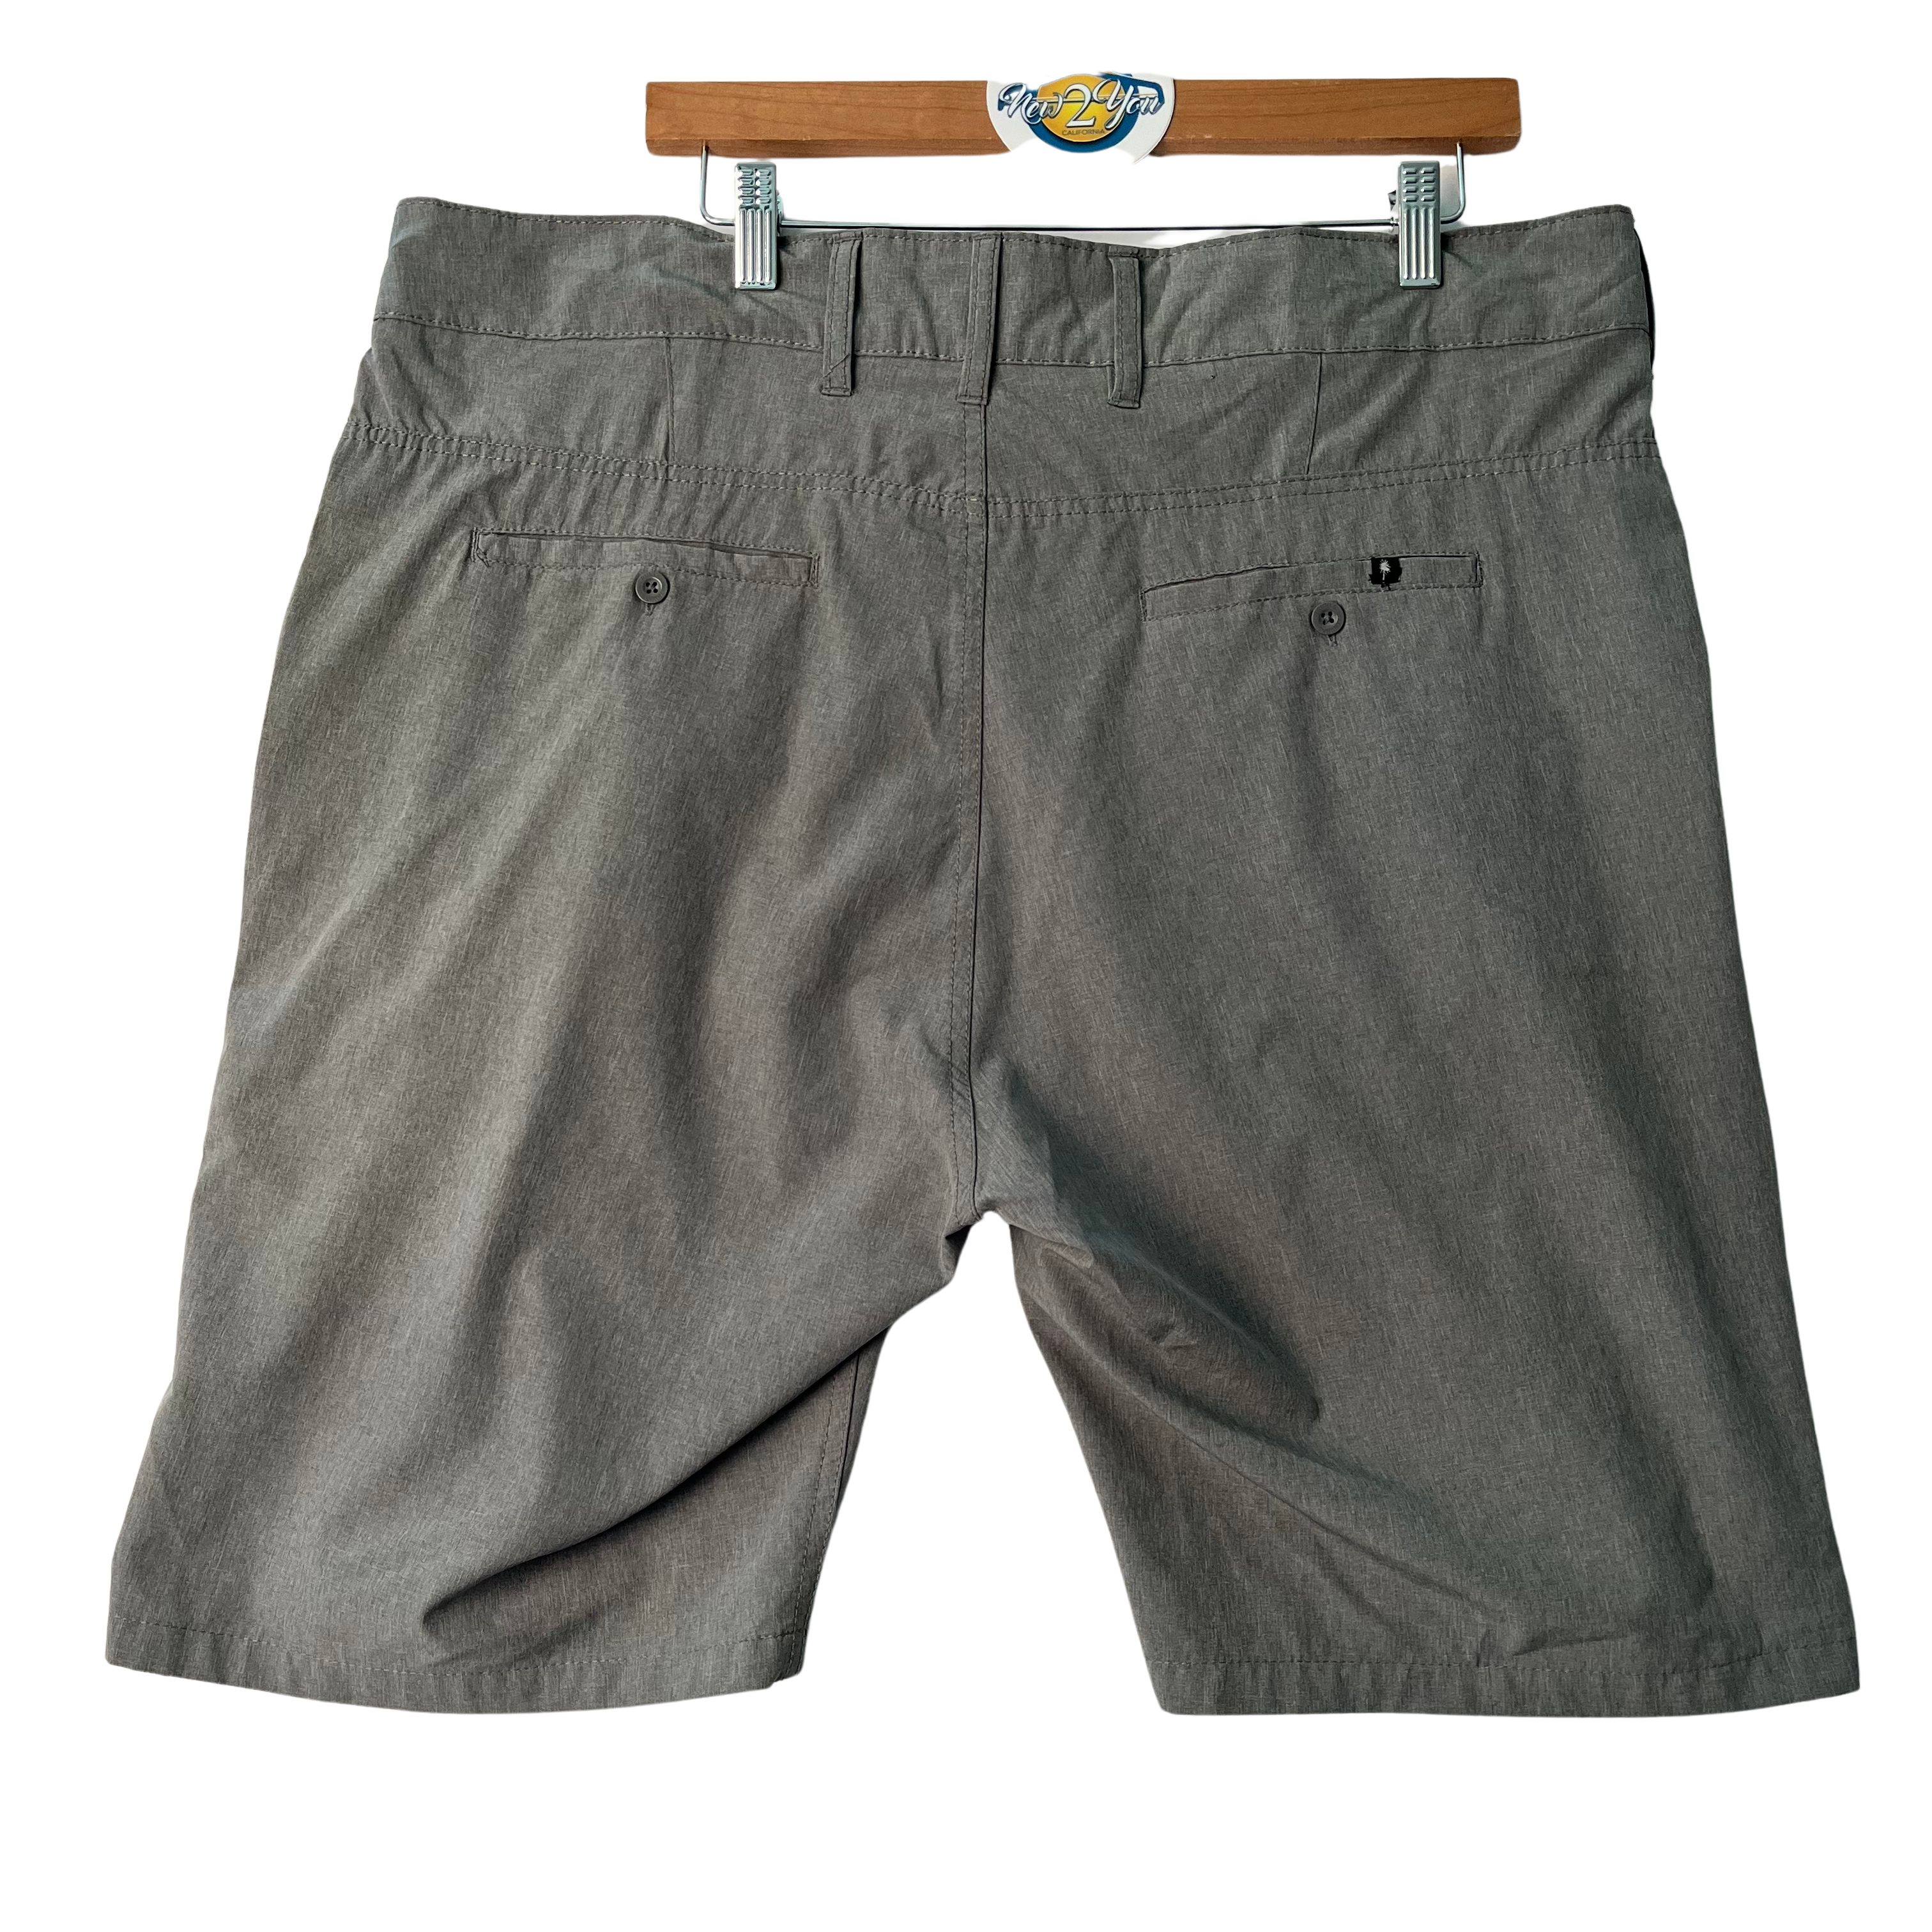 Trunks Grey Swim Shorts